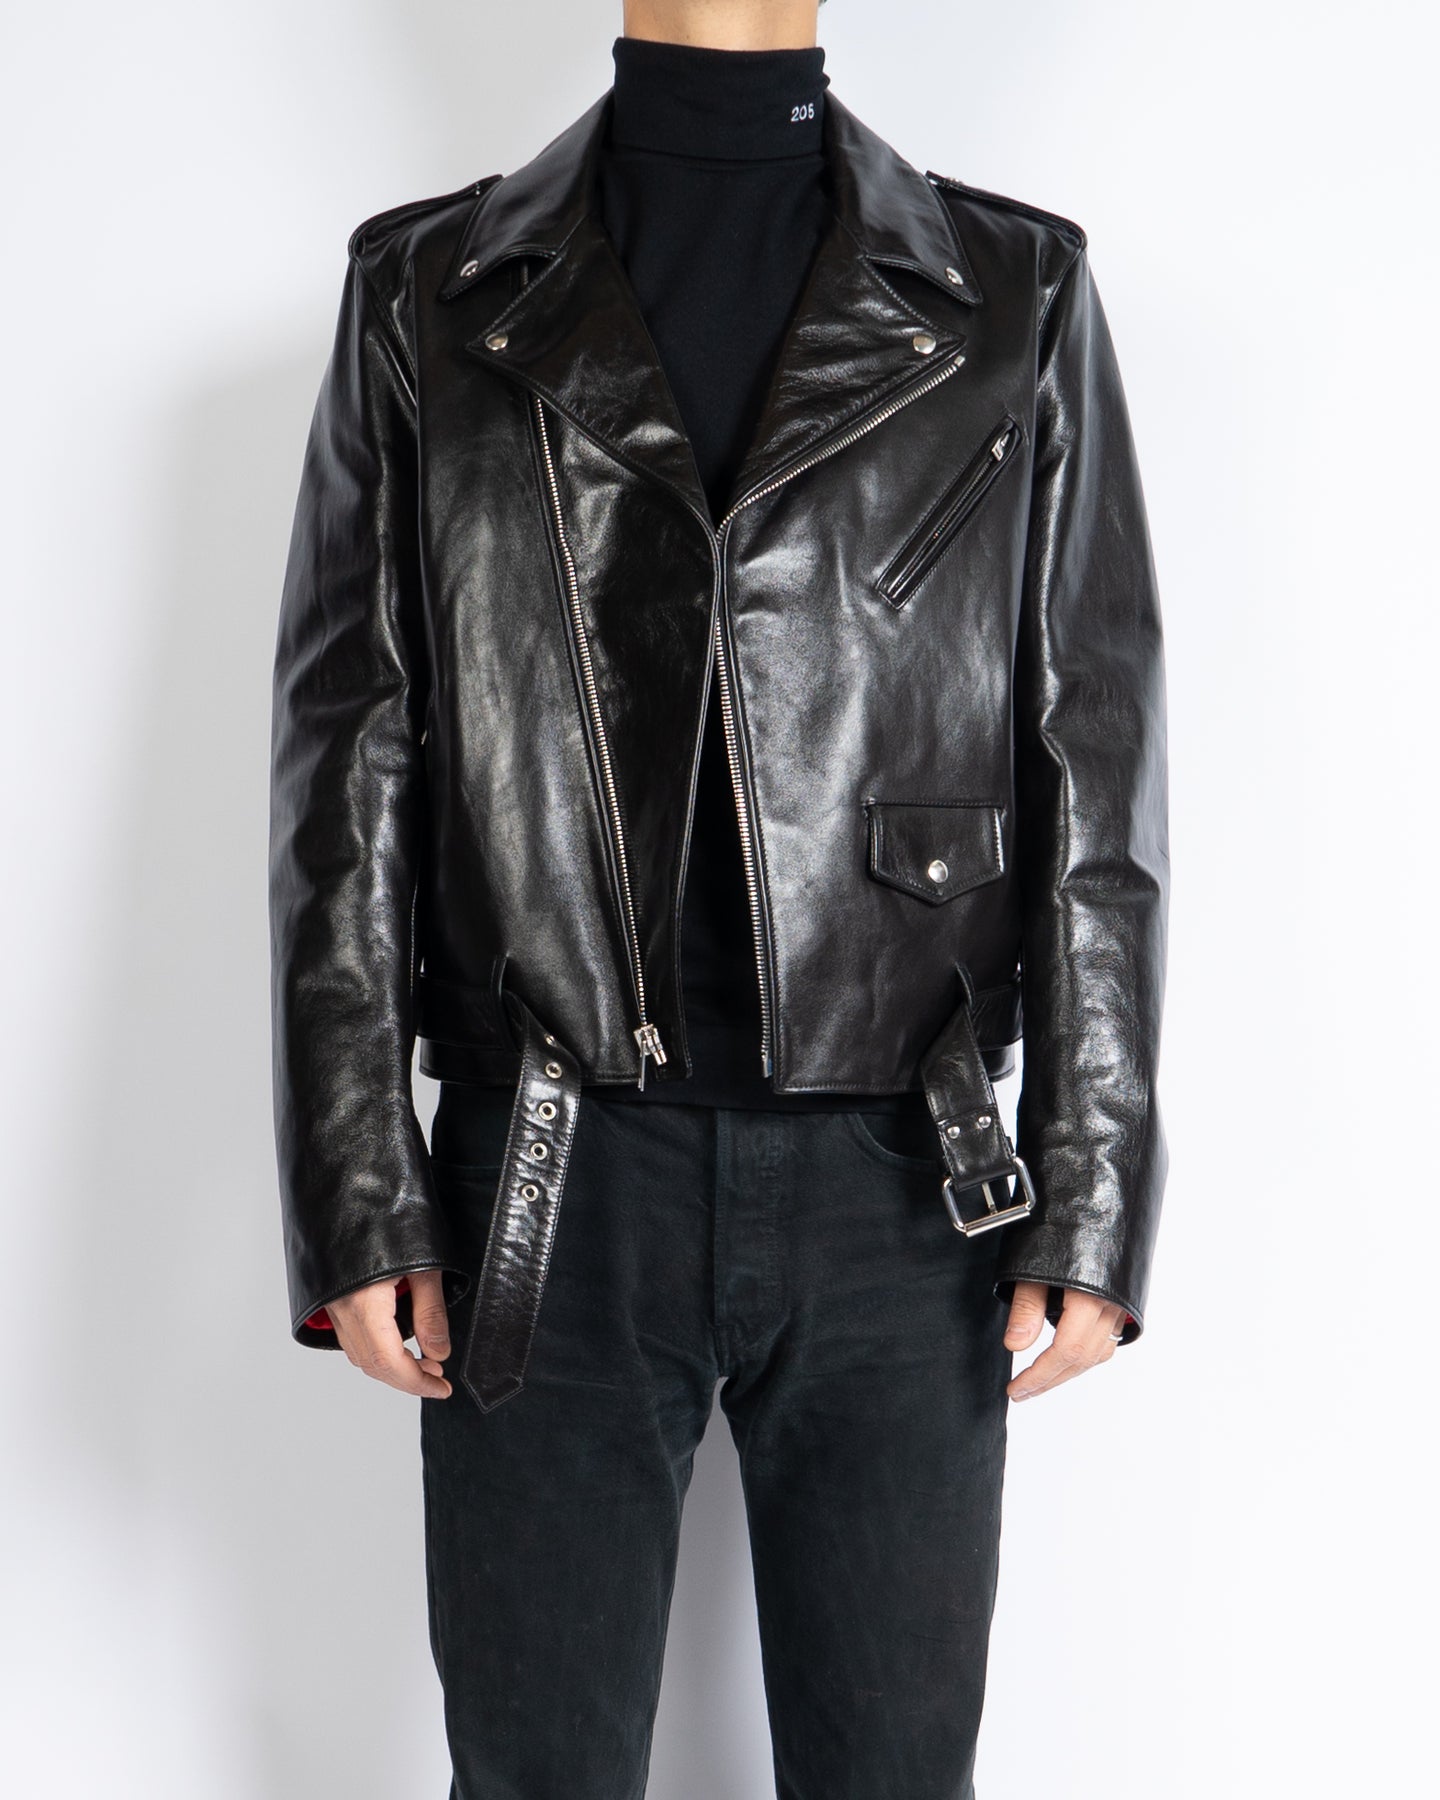 SS18 Steven Sprouse Screenprinted Leather Biker Jacket